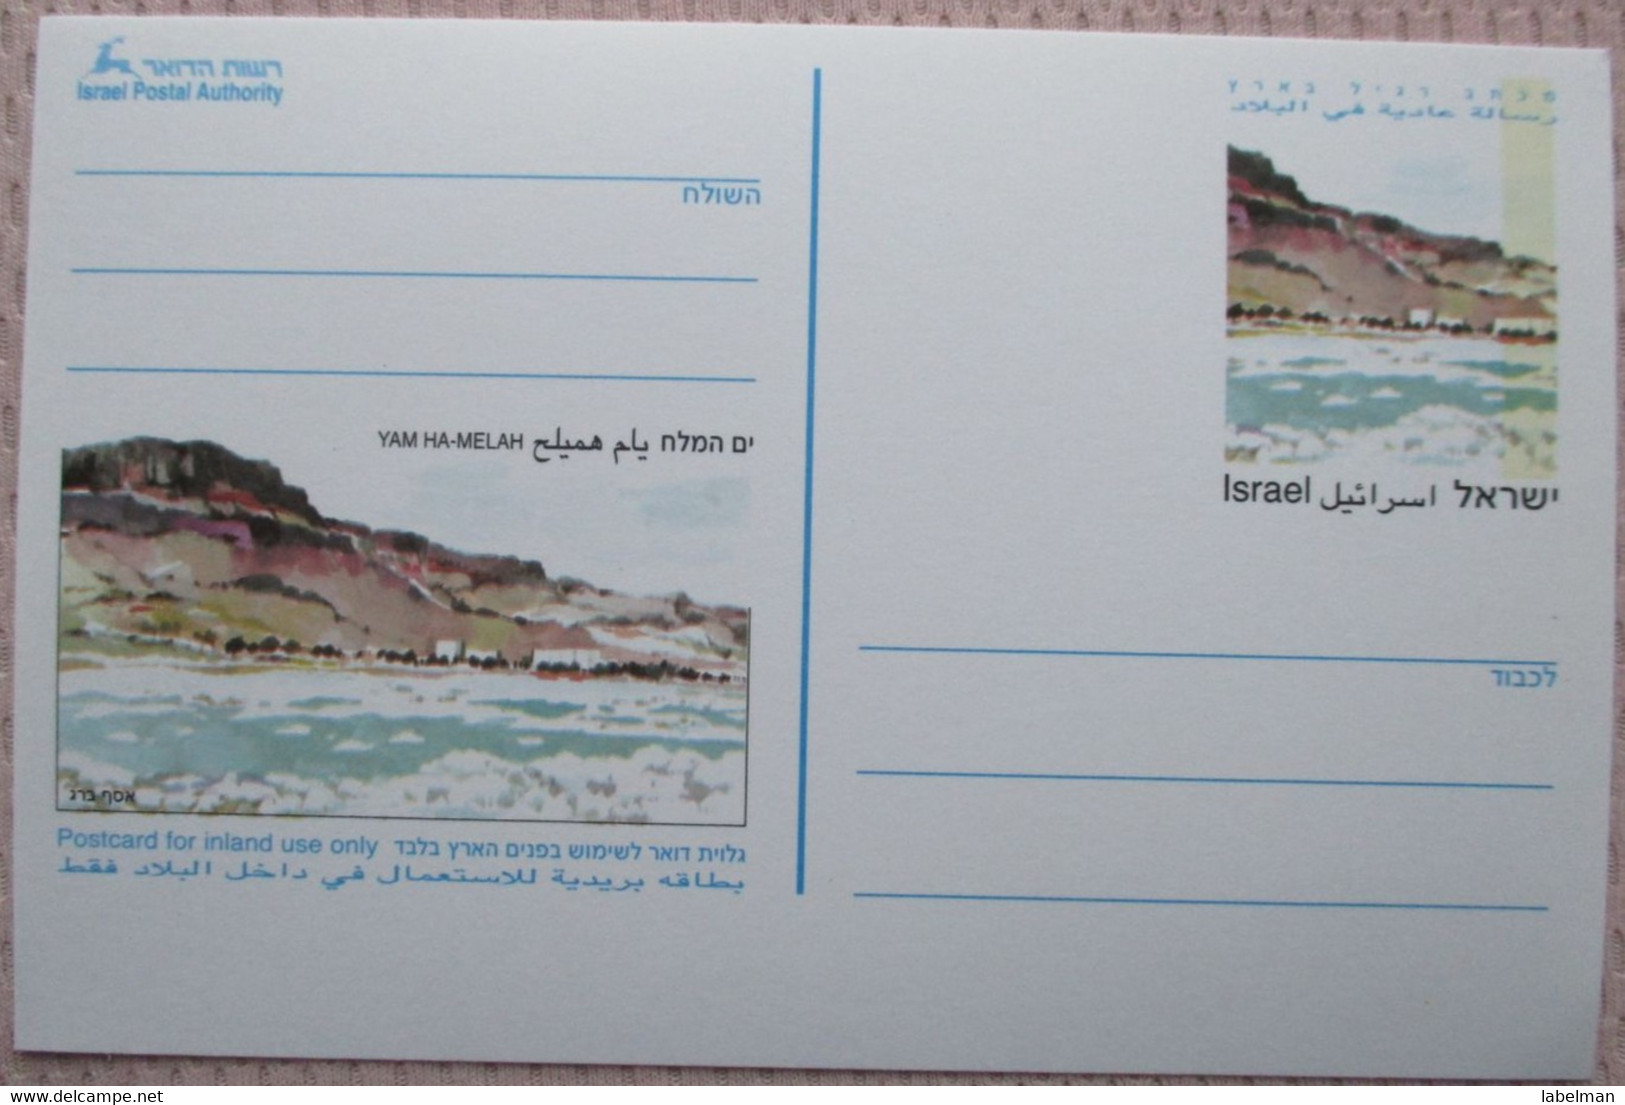 ISRAEL POSTAL AUTHORITY DEAD SEA DESERT INLAND PREPAID POSTCARD POSTKARTE CARD ANSICHTSKARTE CARTOLINA CARTE POSTALE PC - Cartes-maximum